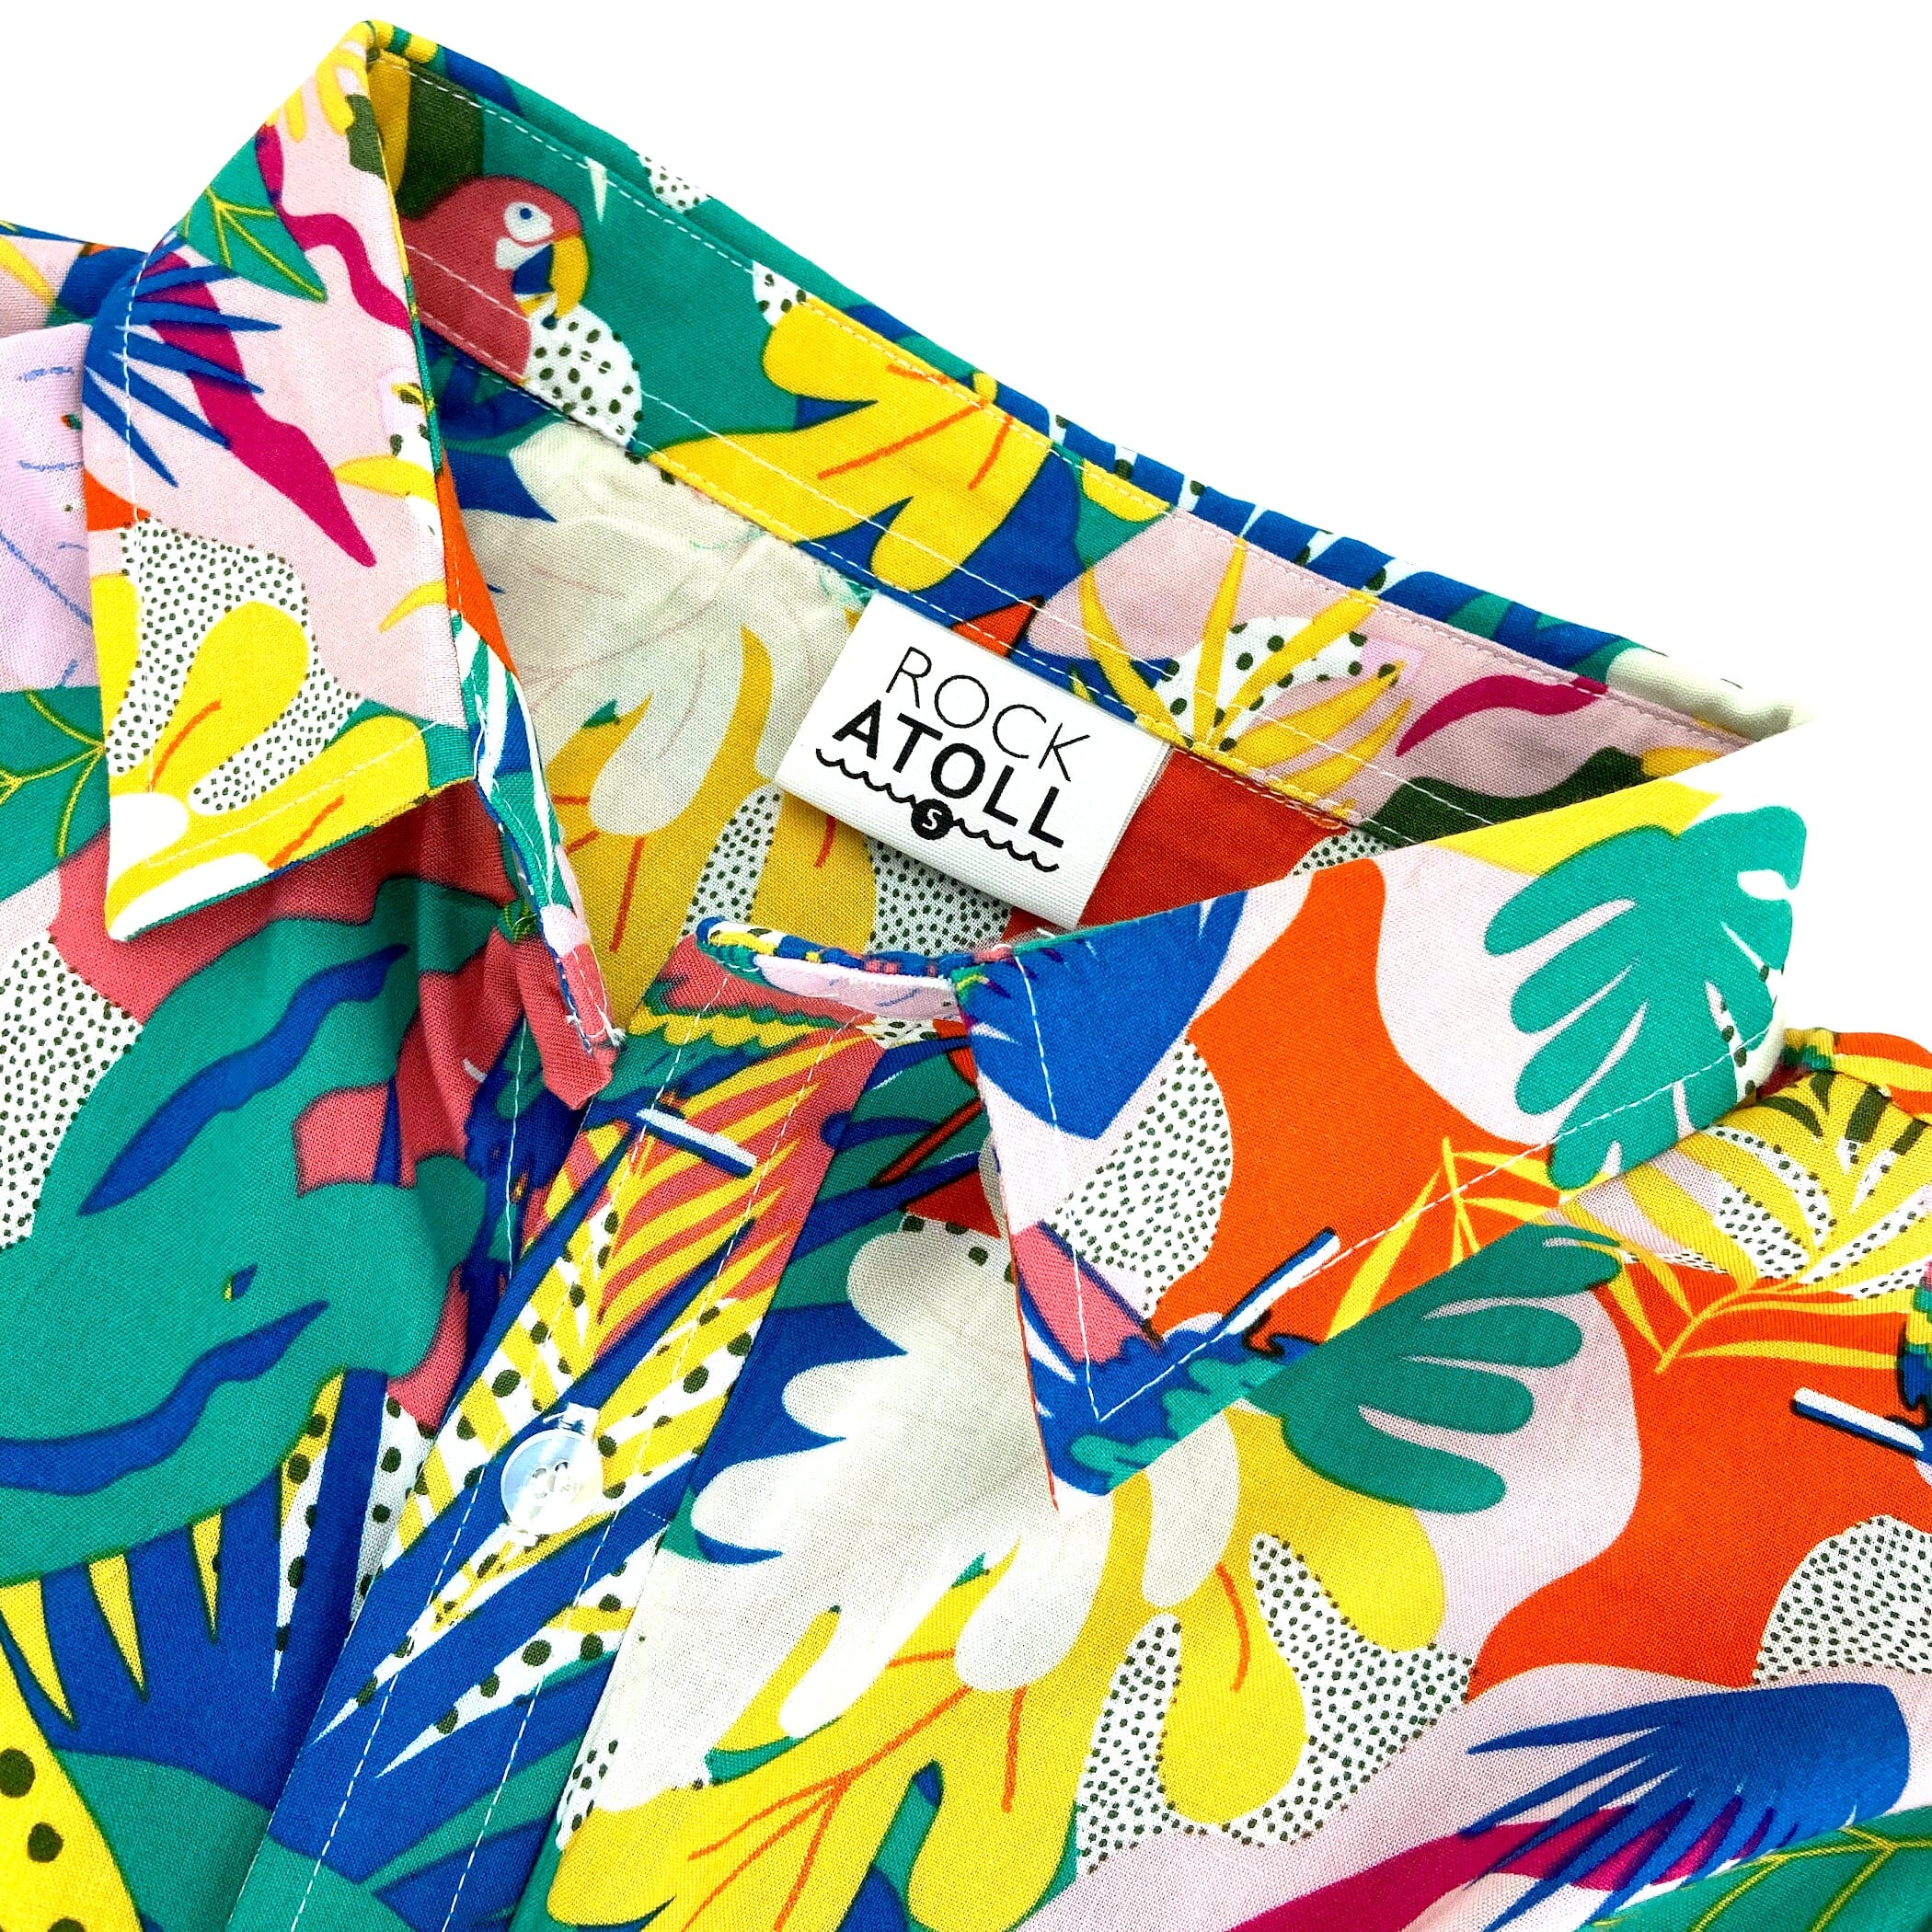 Bright Bold Tropical Abstract Jungle Toucan Print Memphis Design Shirt